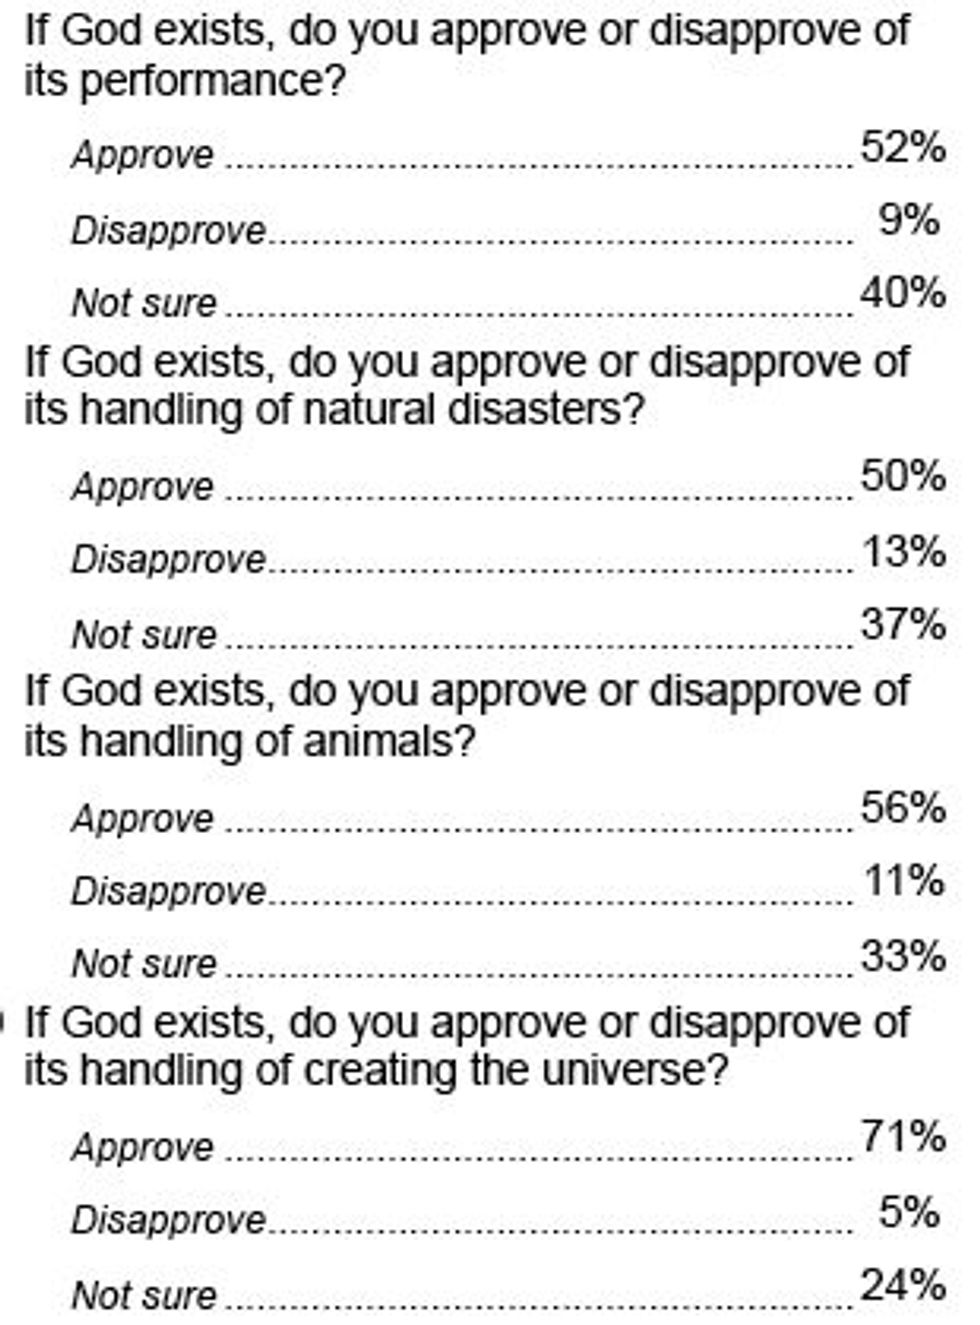 God Gets Only Slightly Higher Job Approval Ratings Than Obama